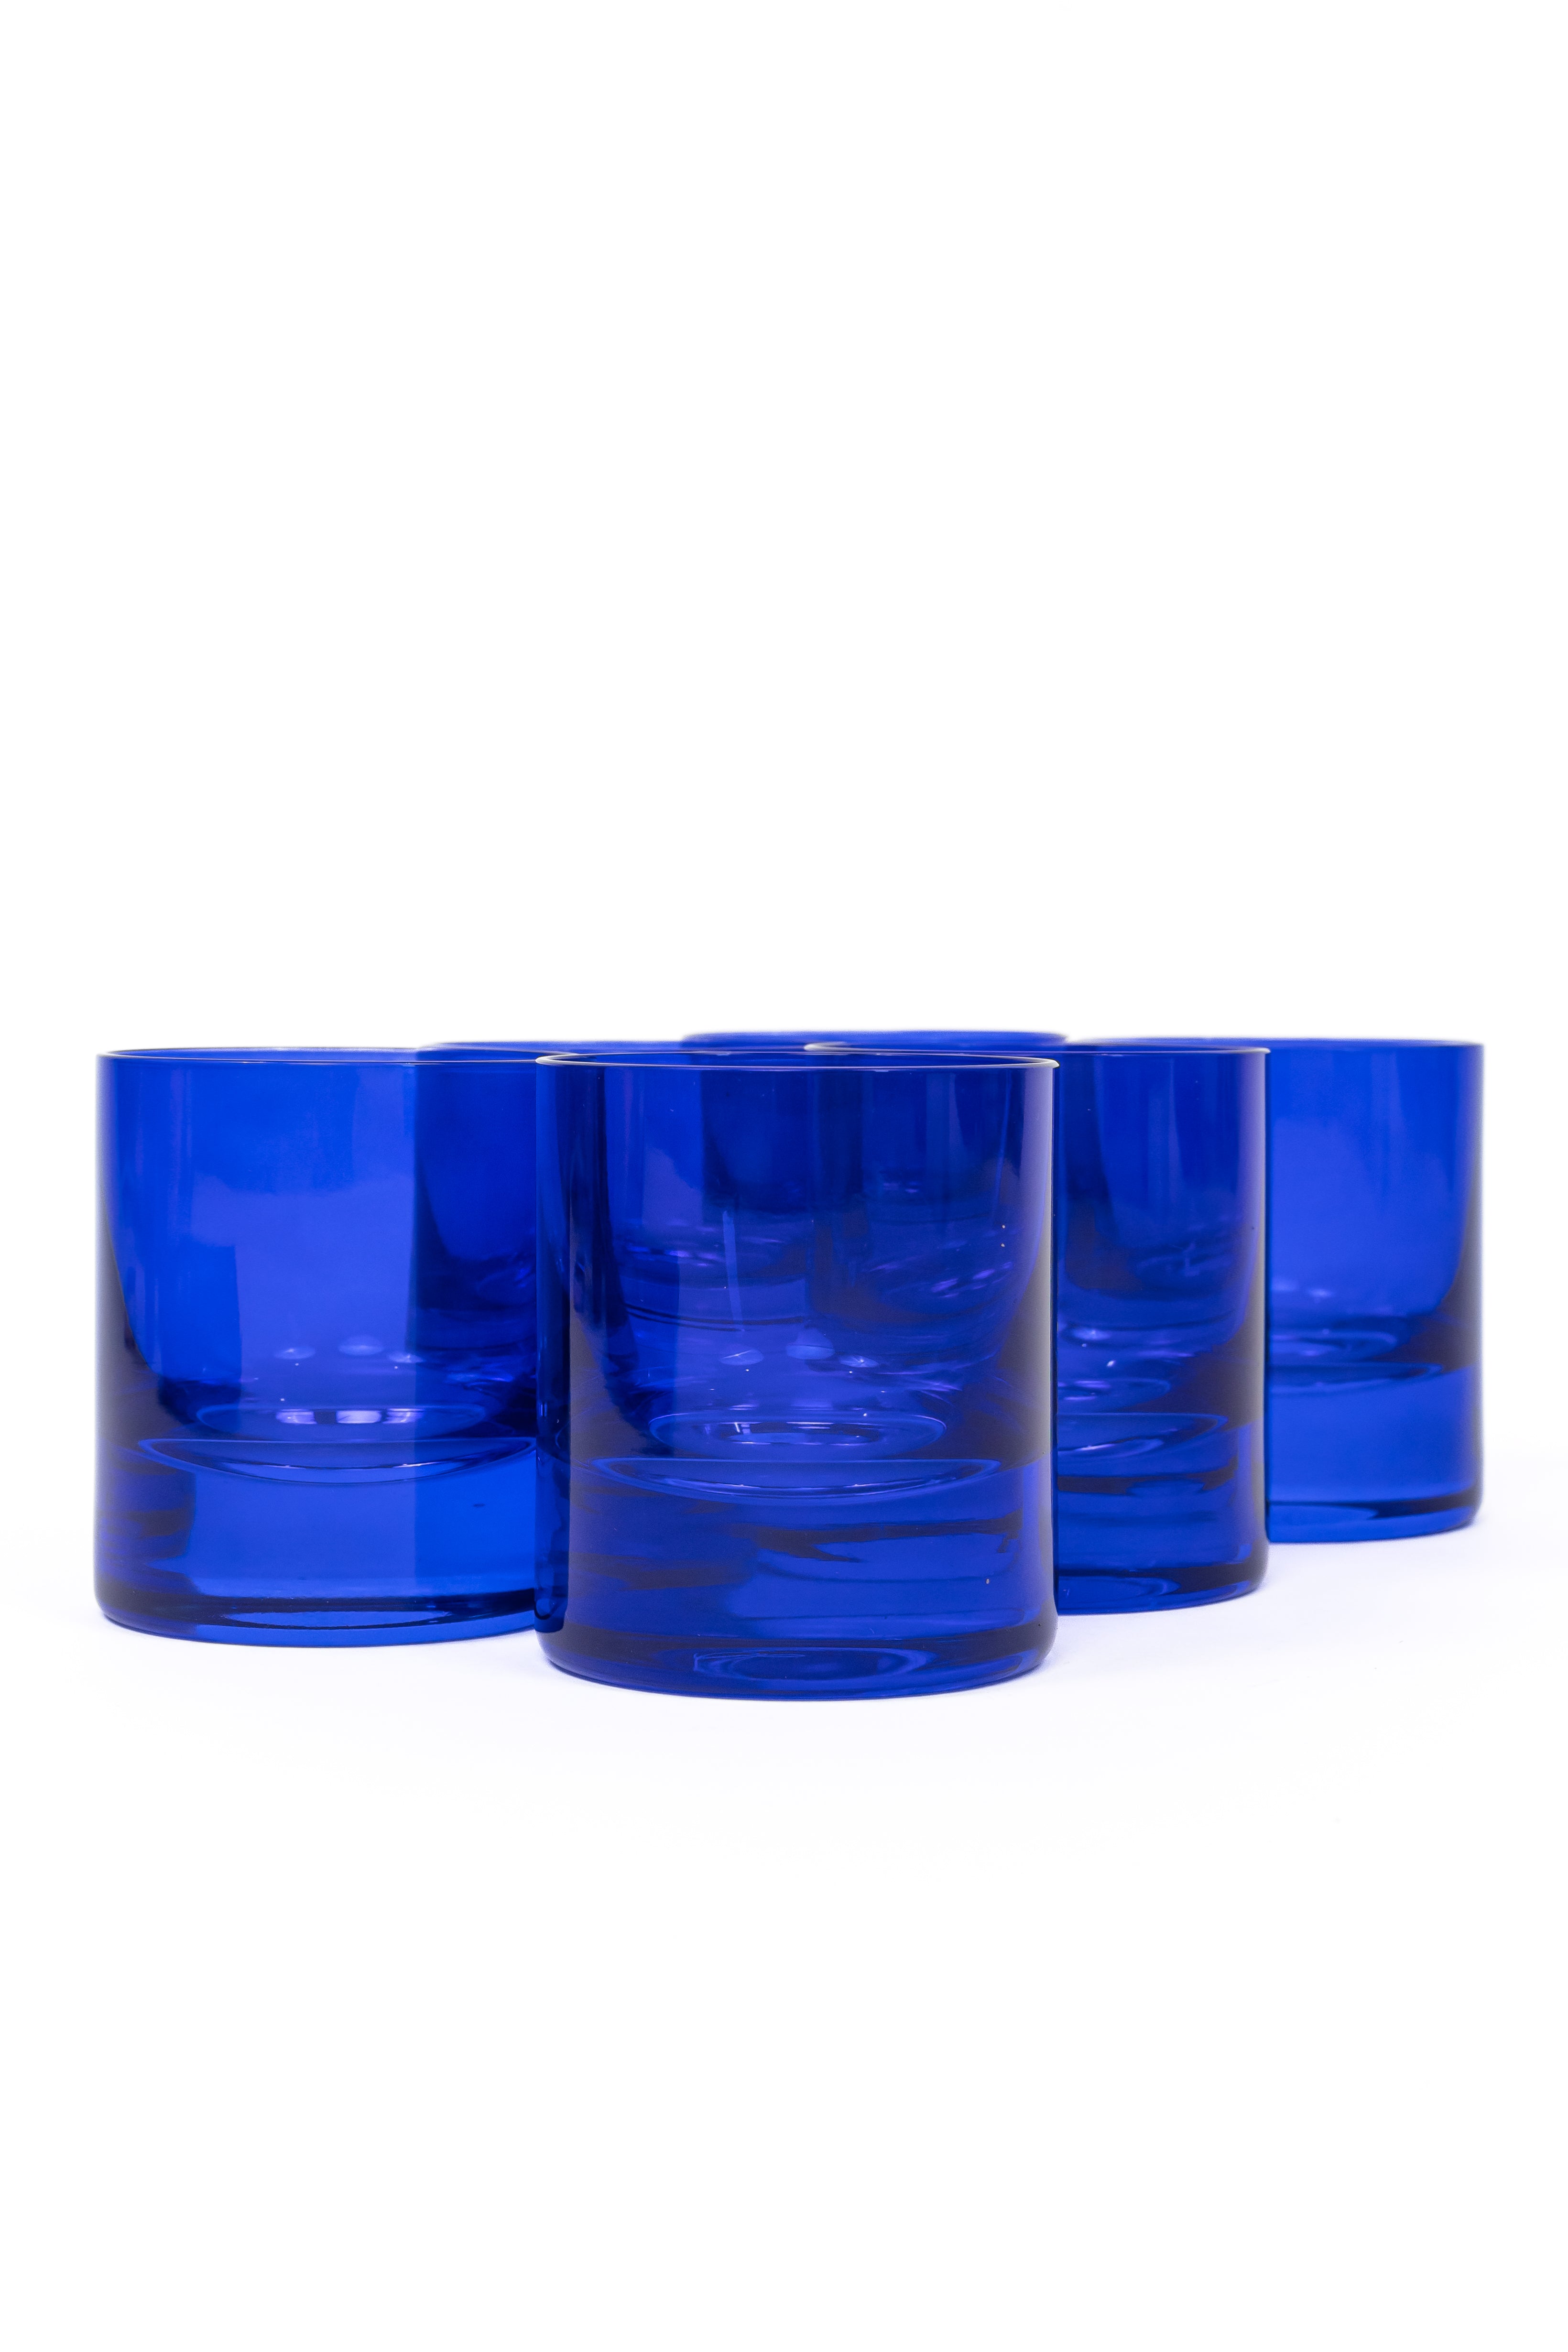 Estelle Colored Rocks Glass - Set of 6 {Royal Blue}